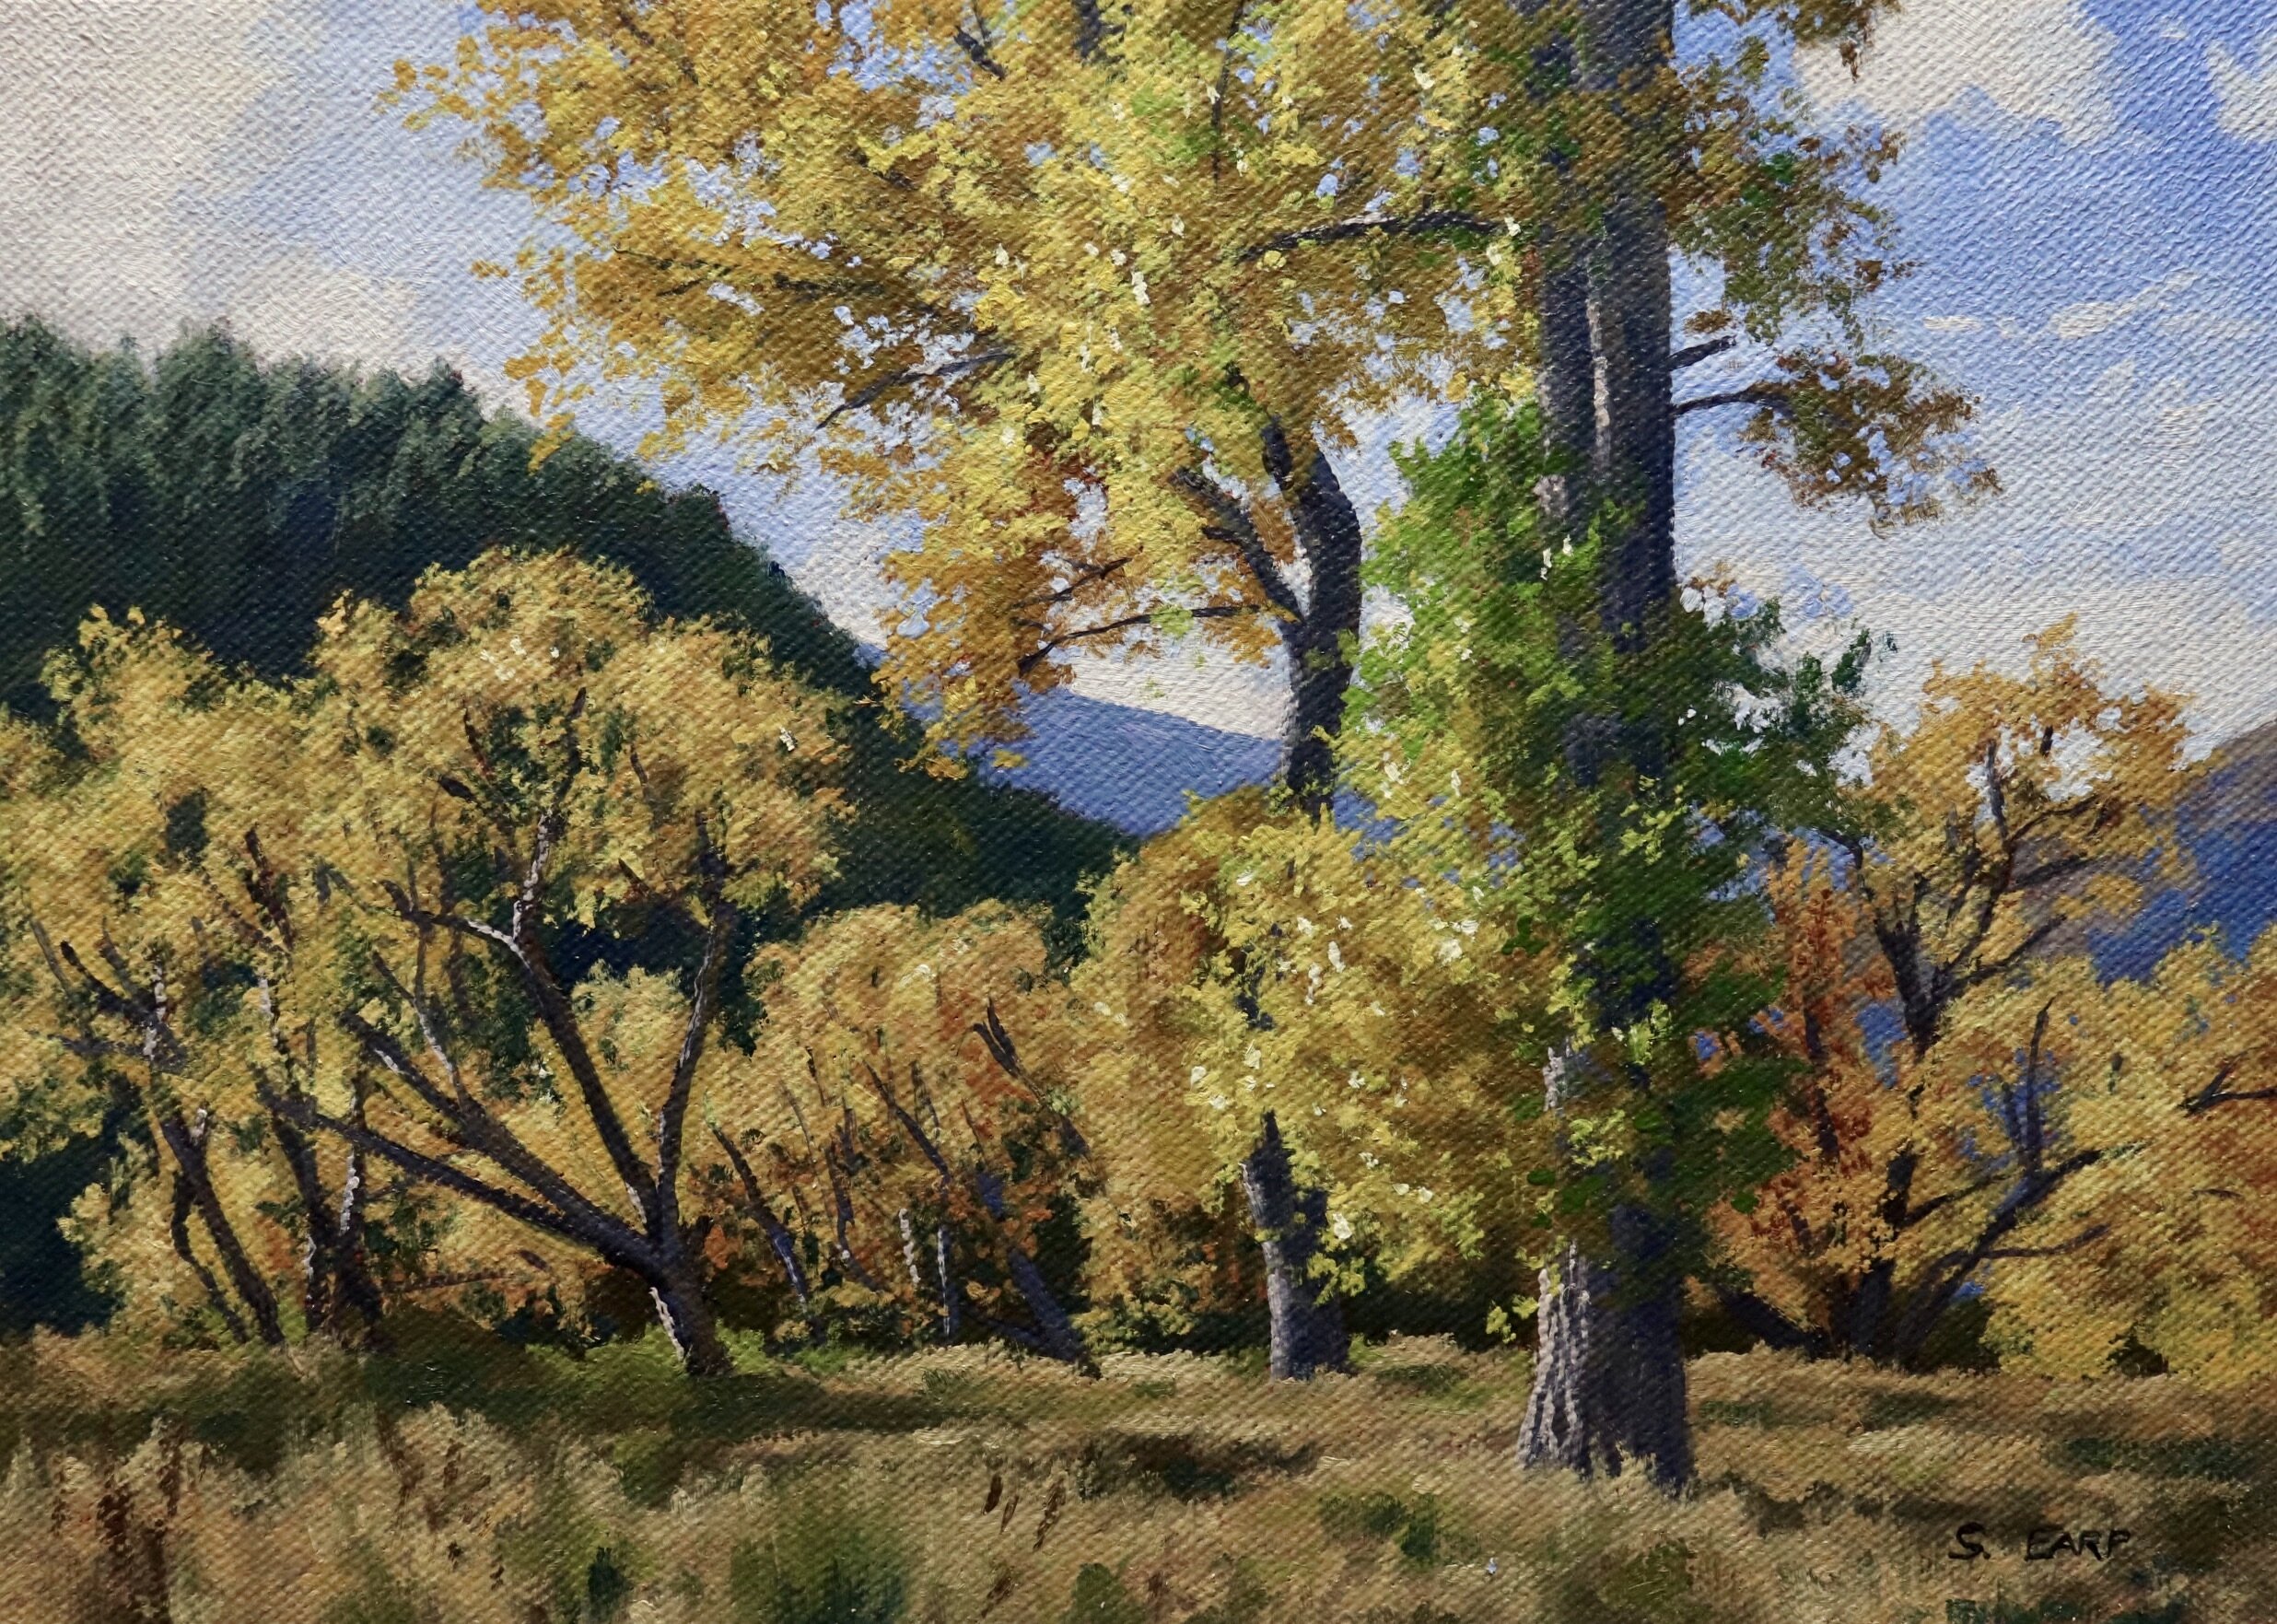 Autumn Willows and Poplars - Samuel Earp Landscape Artist - Oil Painting.jpeg